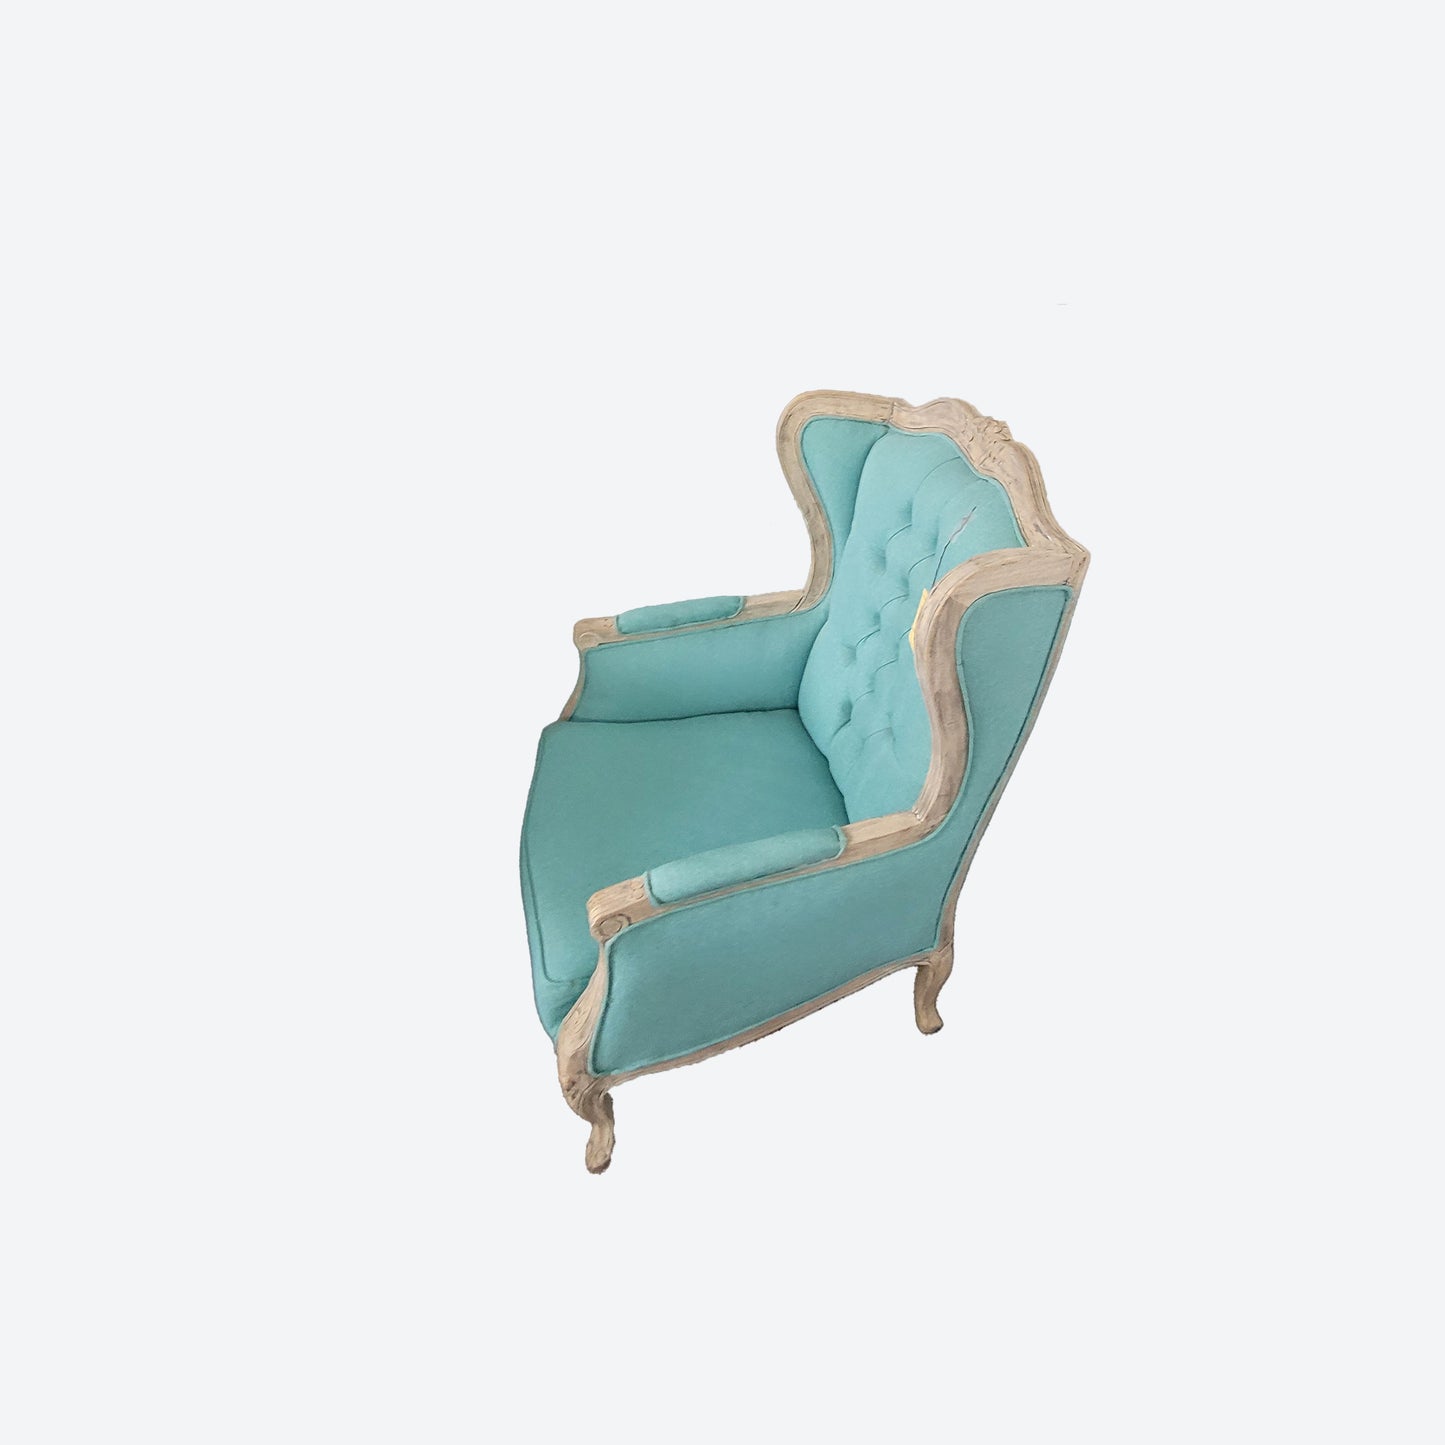 Teal Tufted Organic Canvas Fabric Sofa Chairs With Cedar Wood Trim -SK- SKU 1097